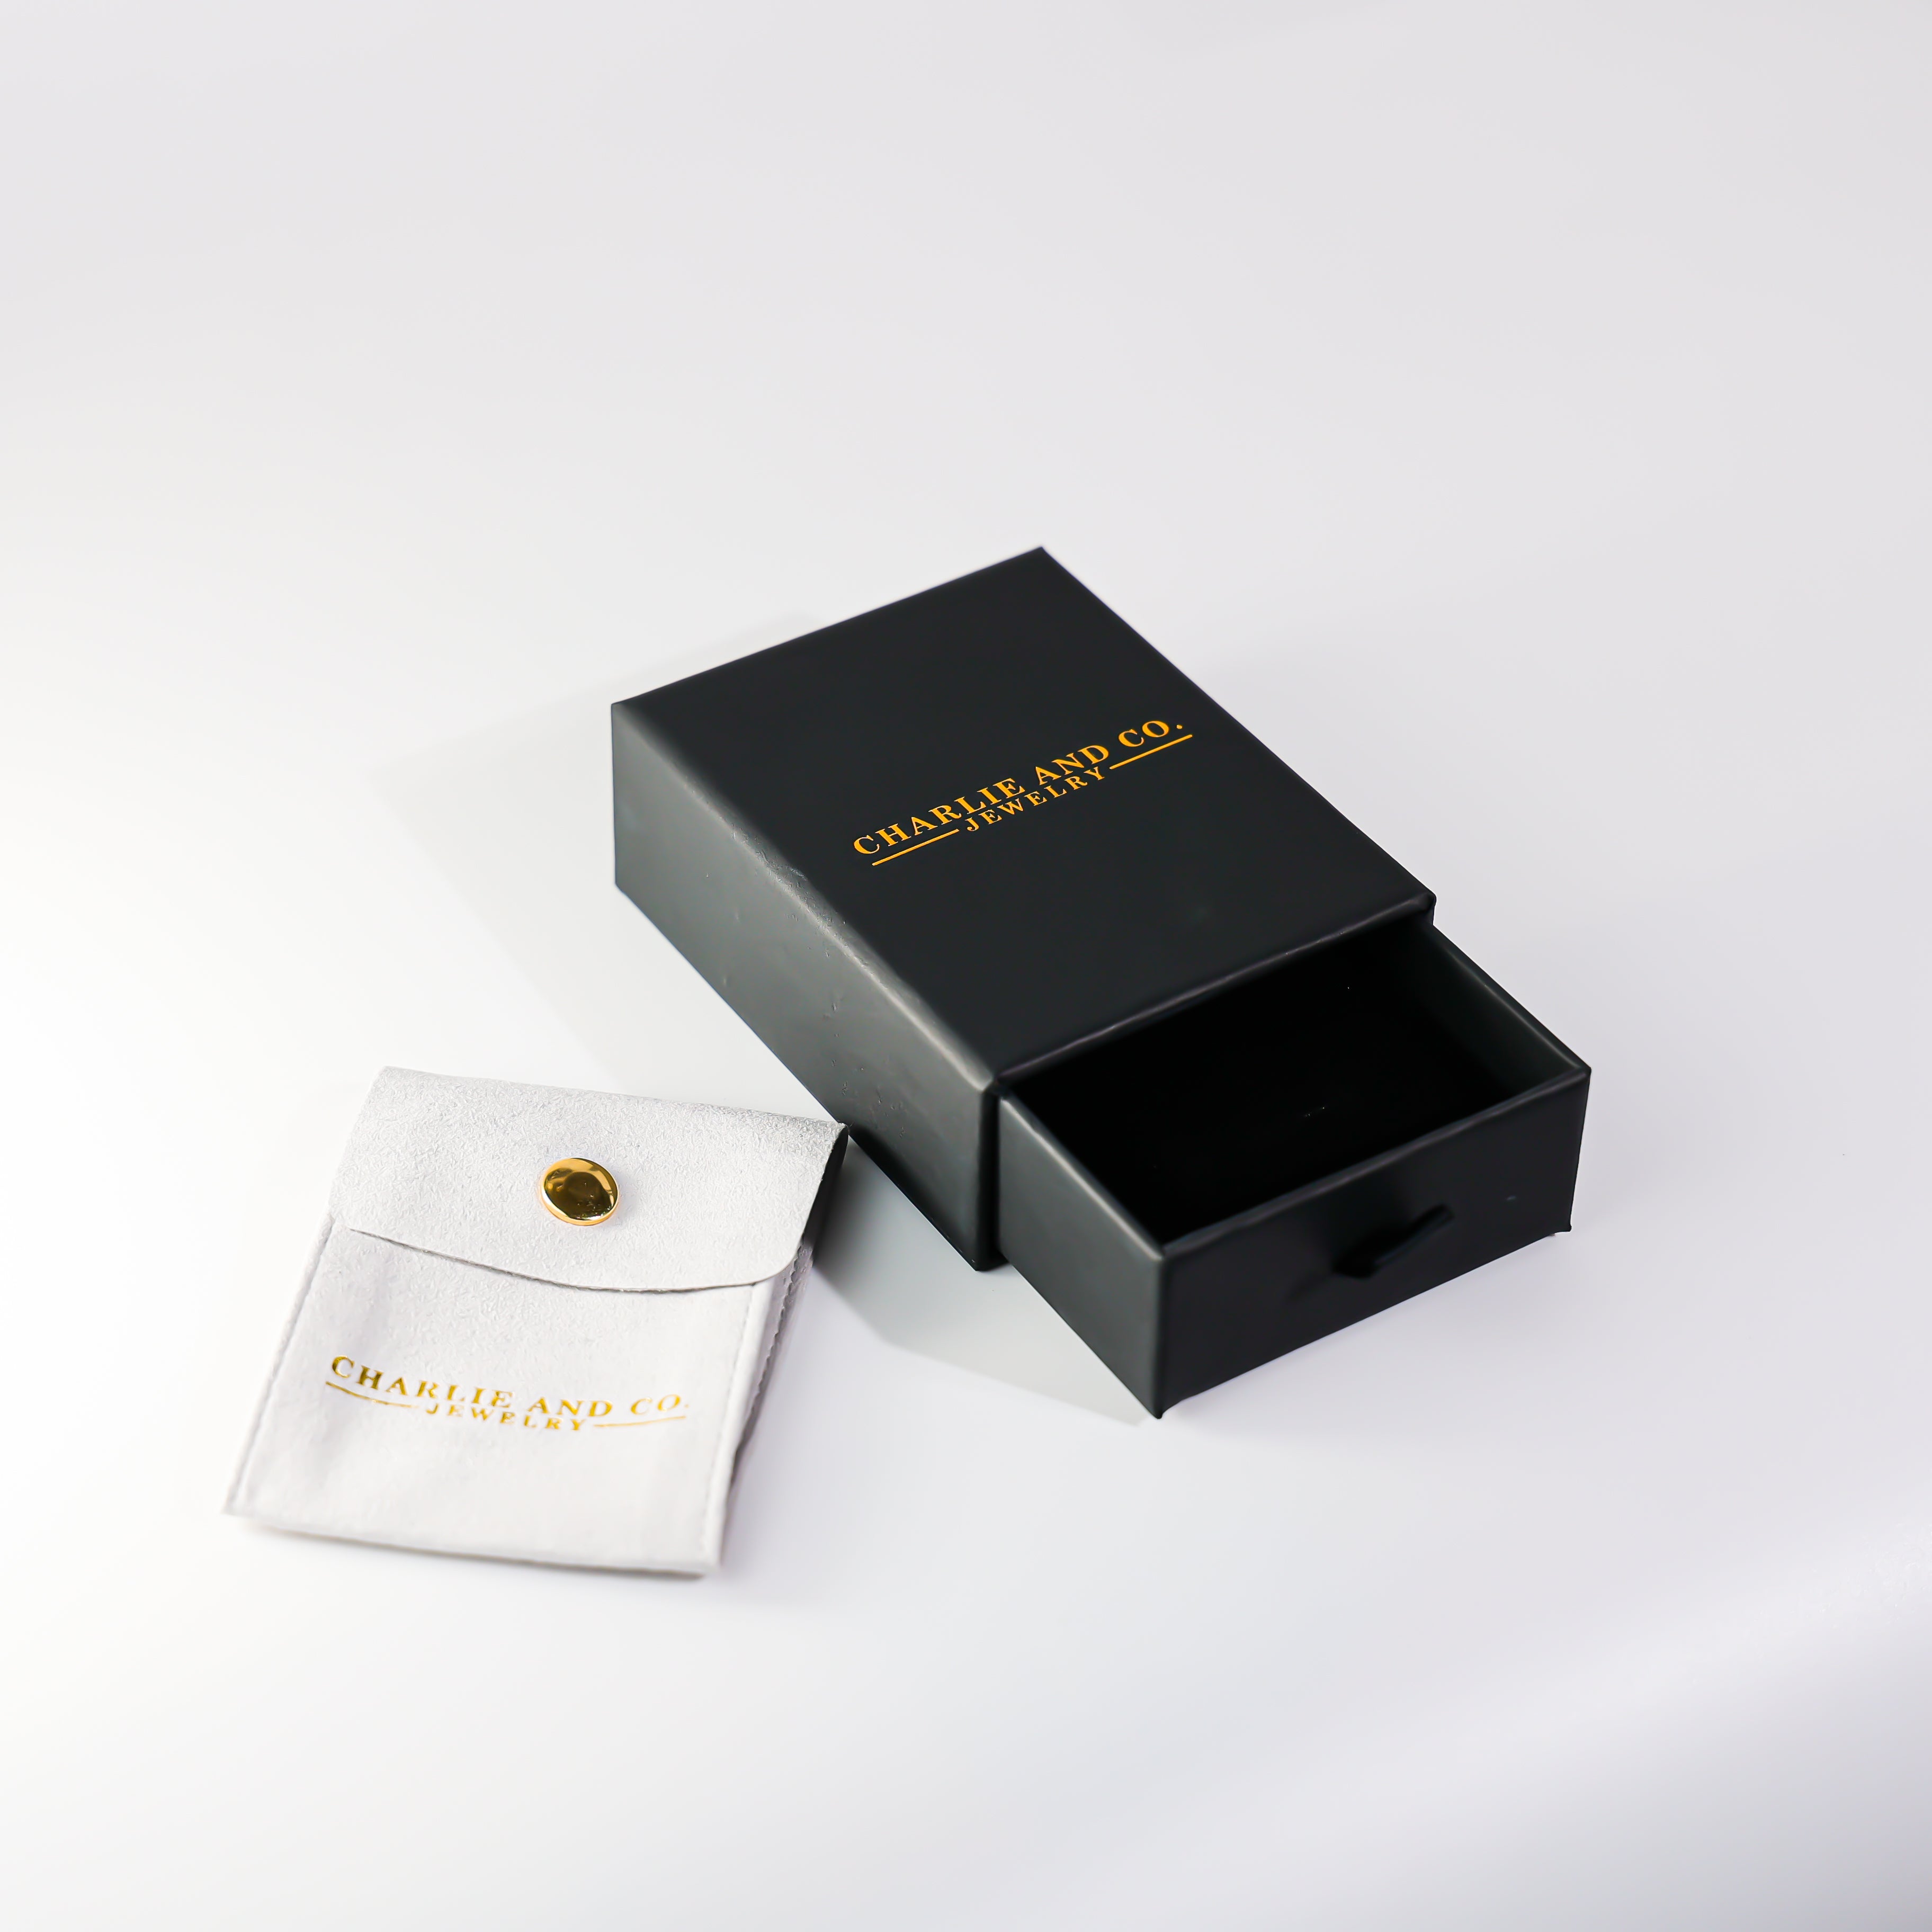 14K Gold Boy January Birthstone Garnet Charm Pendant - Charlie & Co. Jewelry